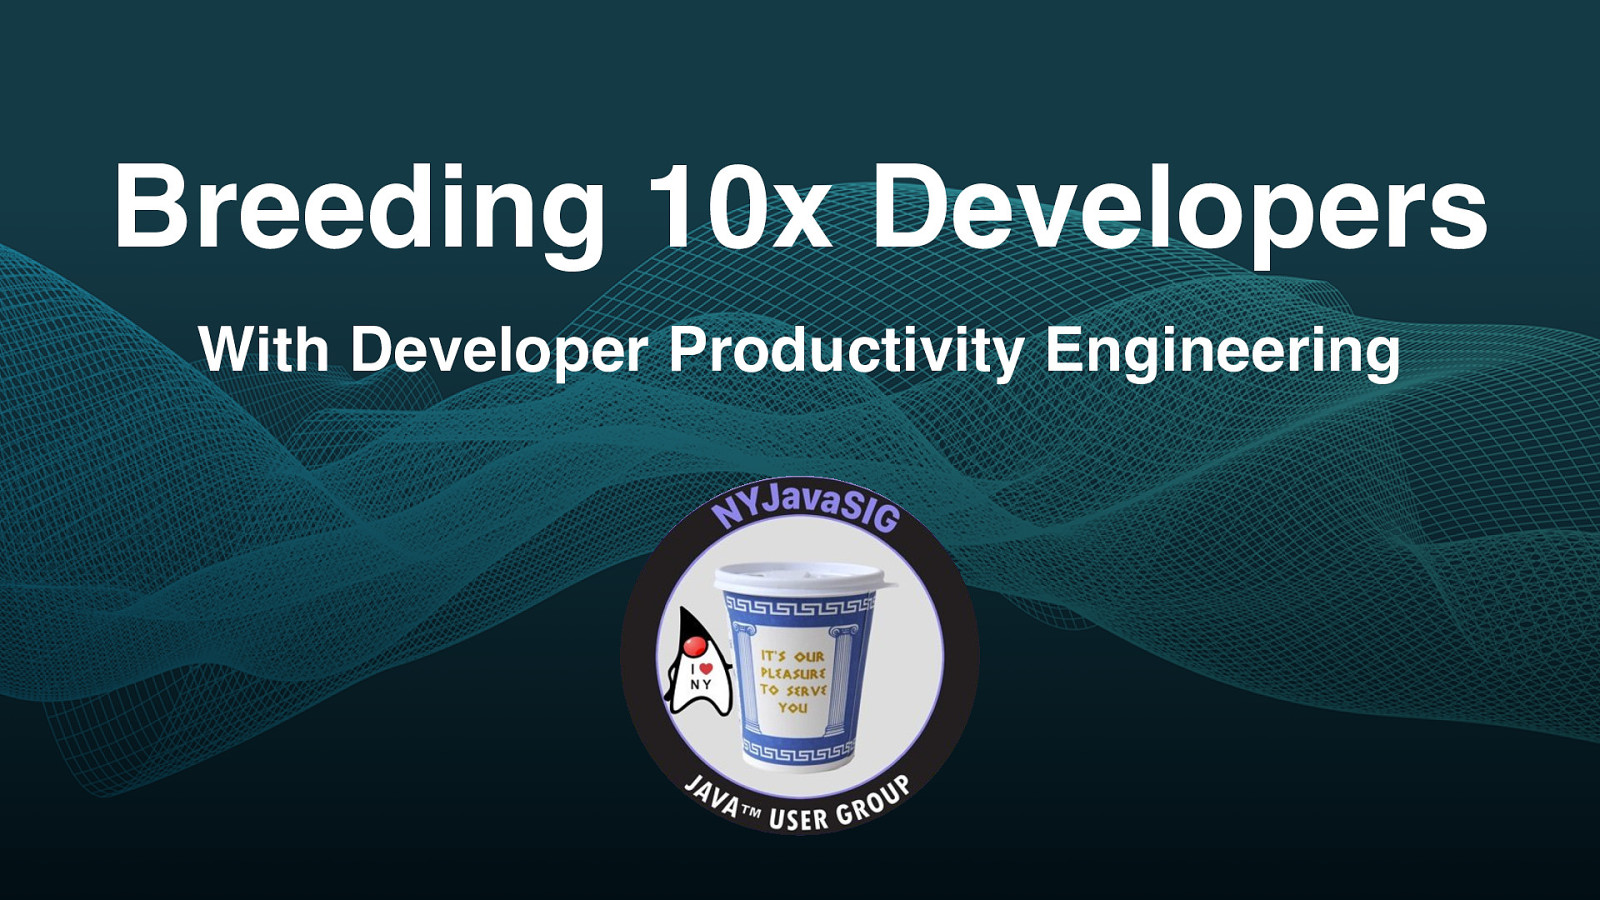 Breeding 10x Developers with Developer Productivity Engineering